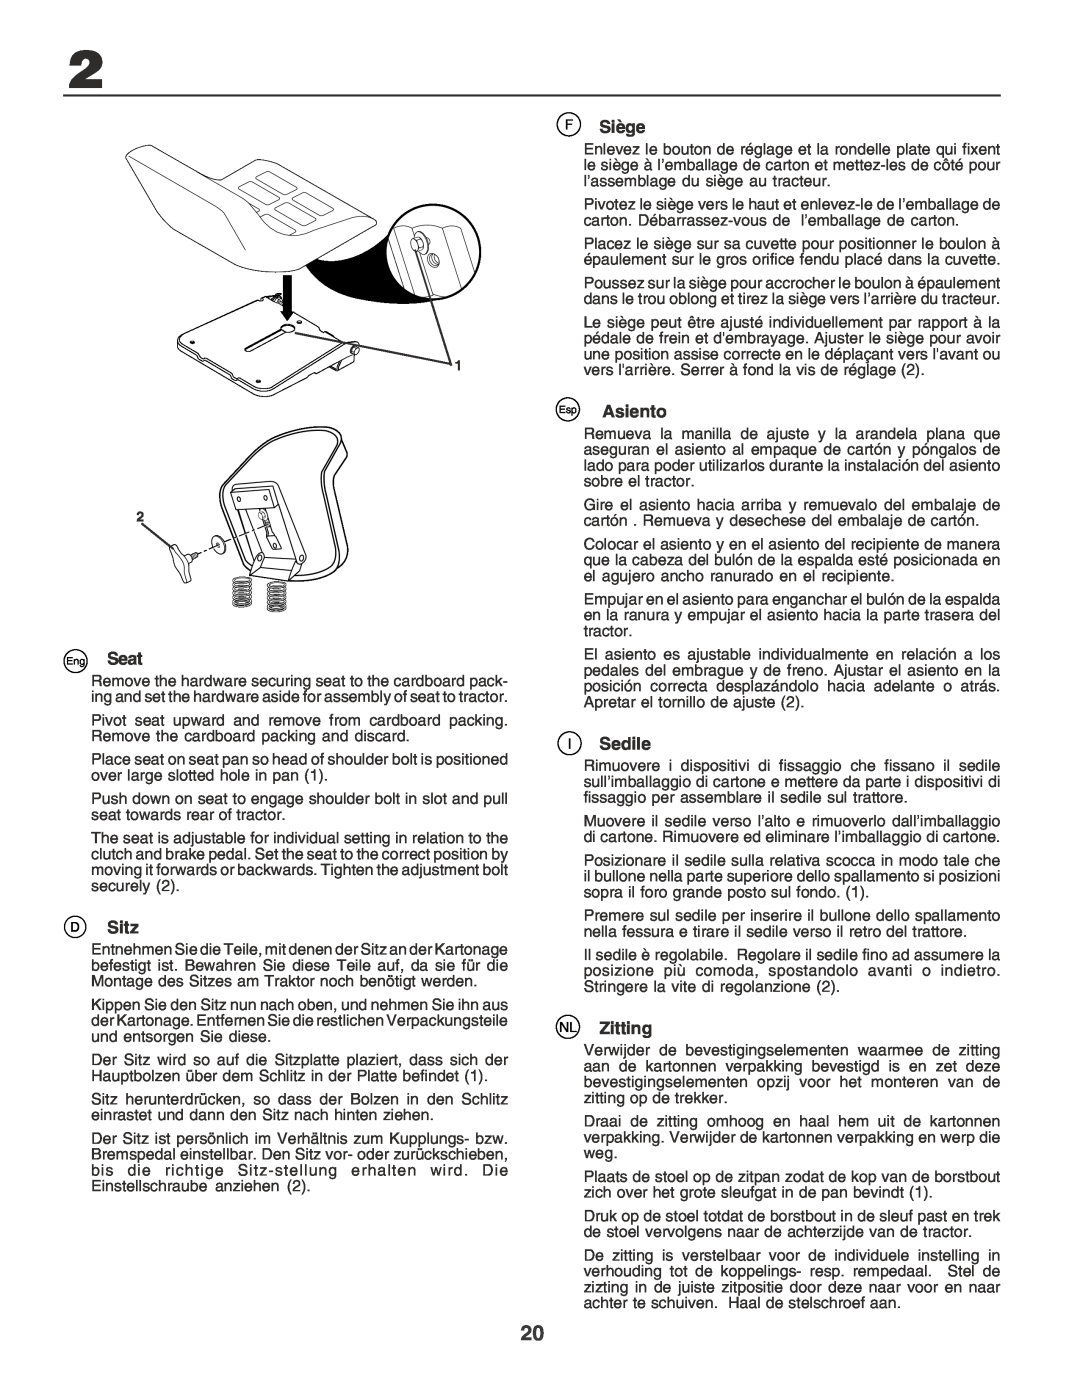 Husqvarna CTH170 instruction manual Sitz, F Siège, Esp Asiento, Sedile, NL Zitting 